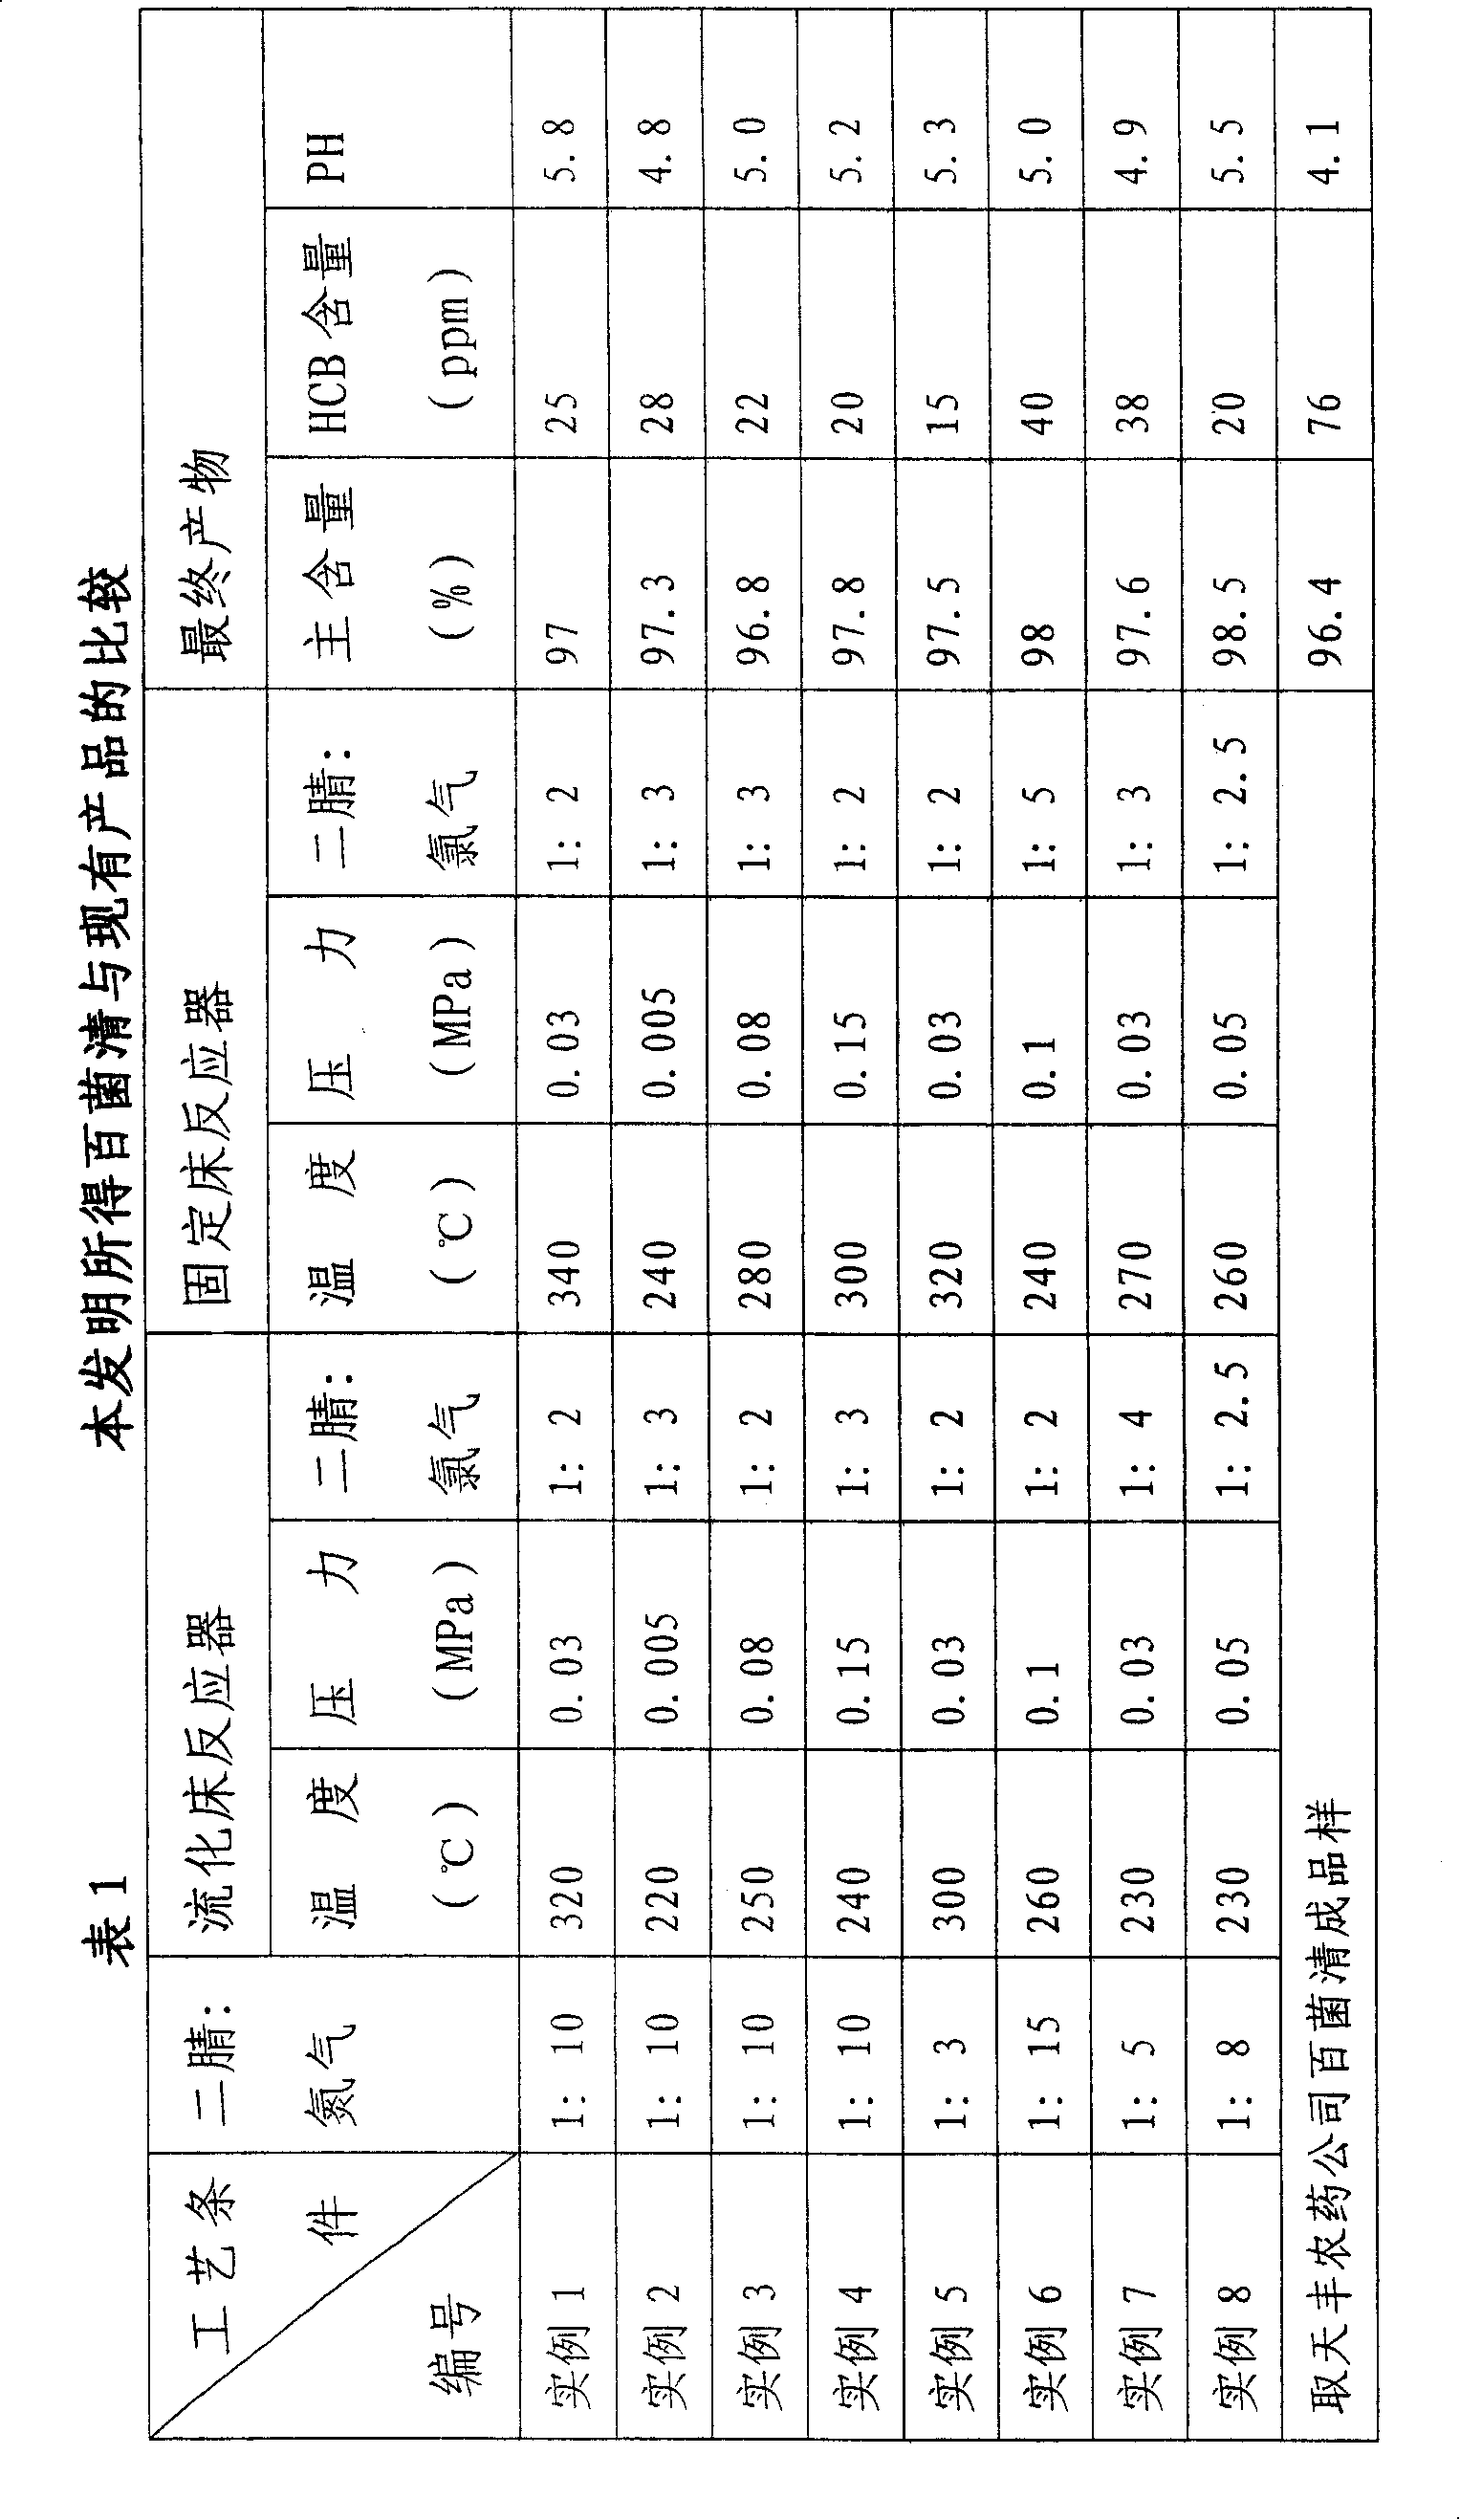 Production method of low hexachlorobenzene content chlorothalonil